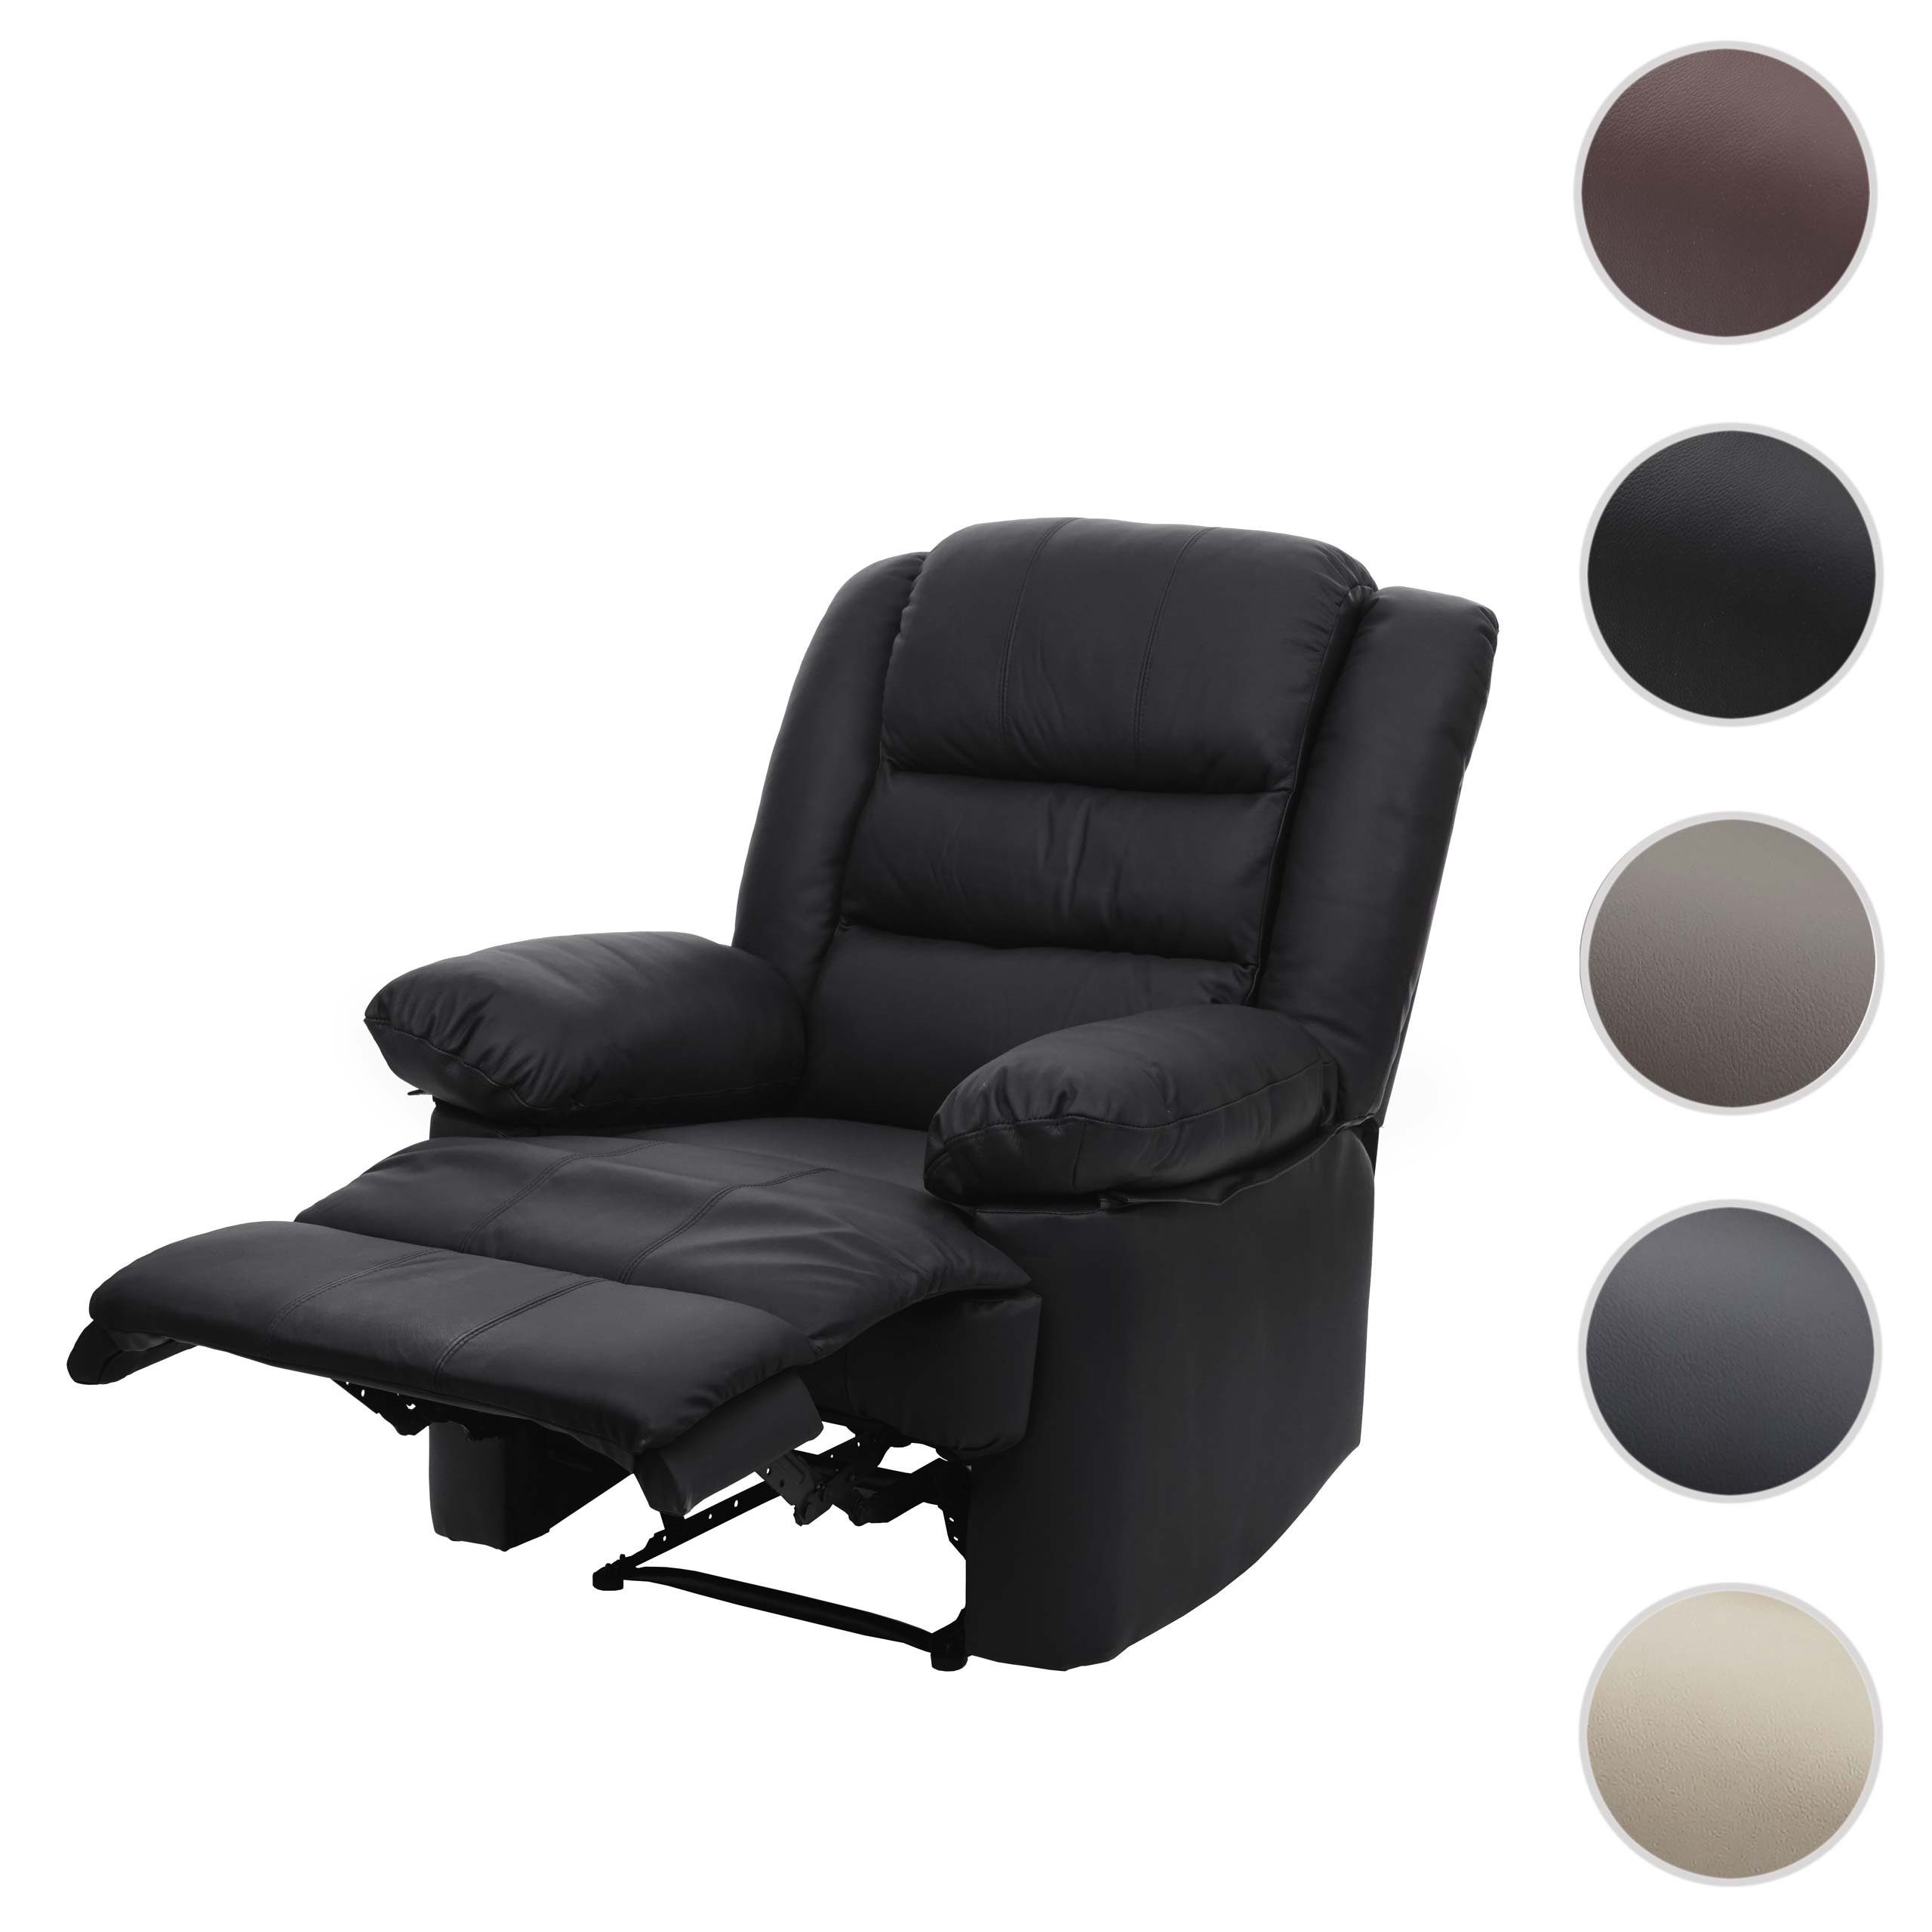 MCW TV-Sessel MCW-G15, Liegefläche: 165 Liegefunktion schwarz Rückenfläche, verstellbar, cm, Verstellbare Fußstütze